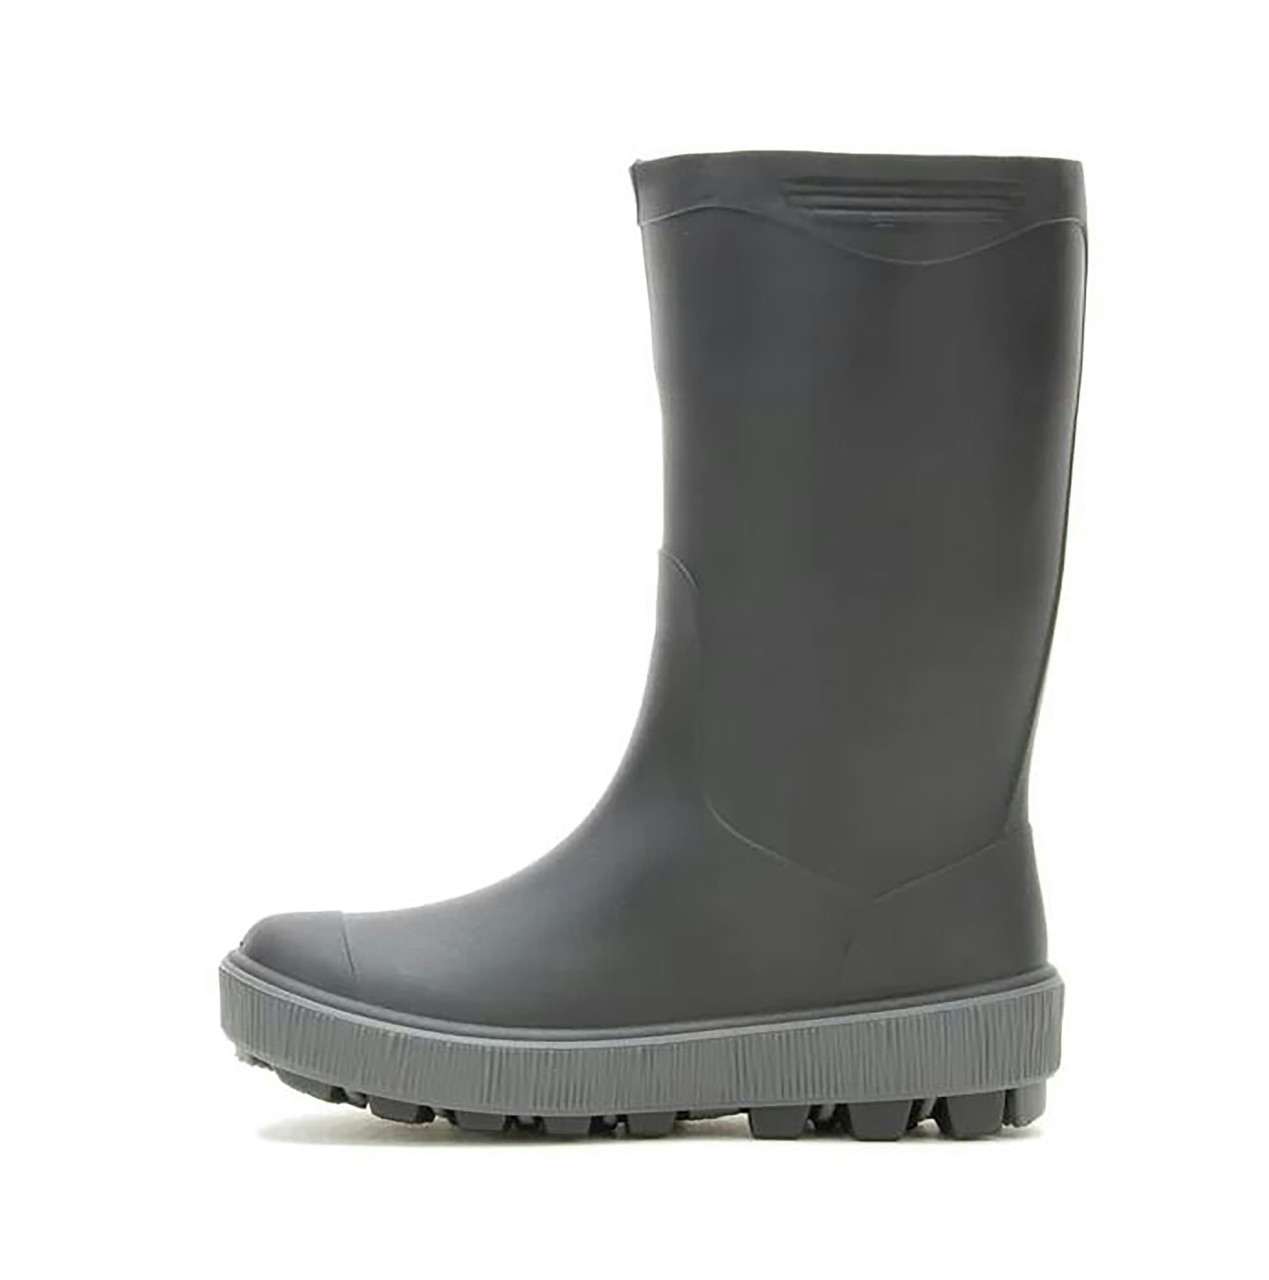 Riptide Rain Boots Black/Charcoal